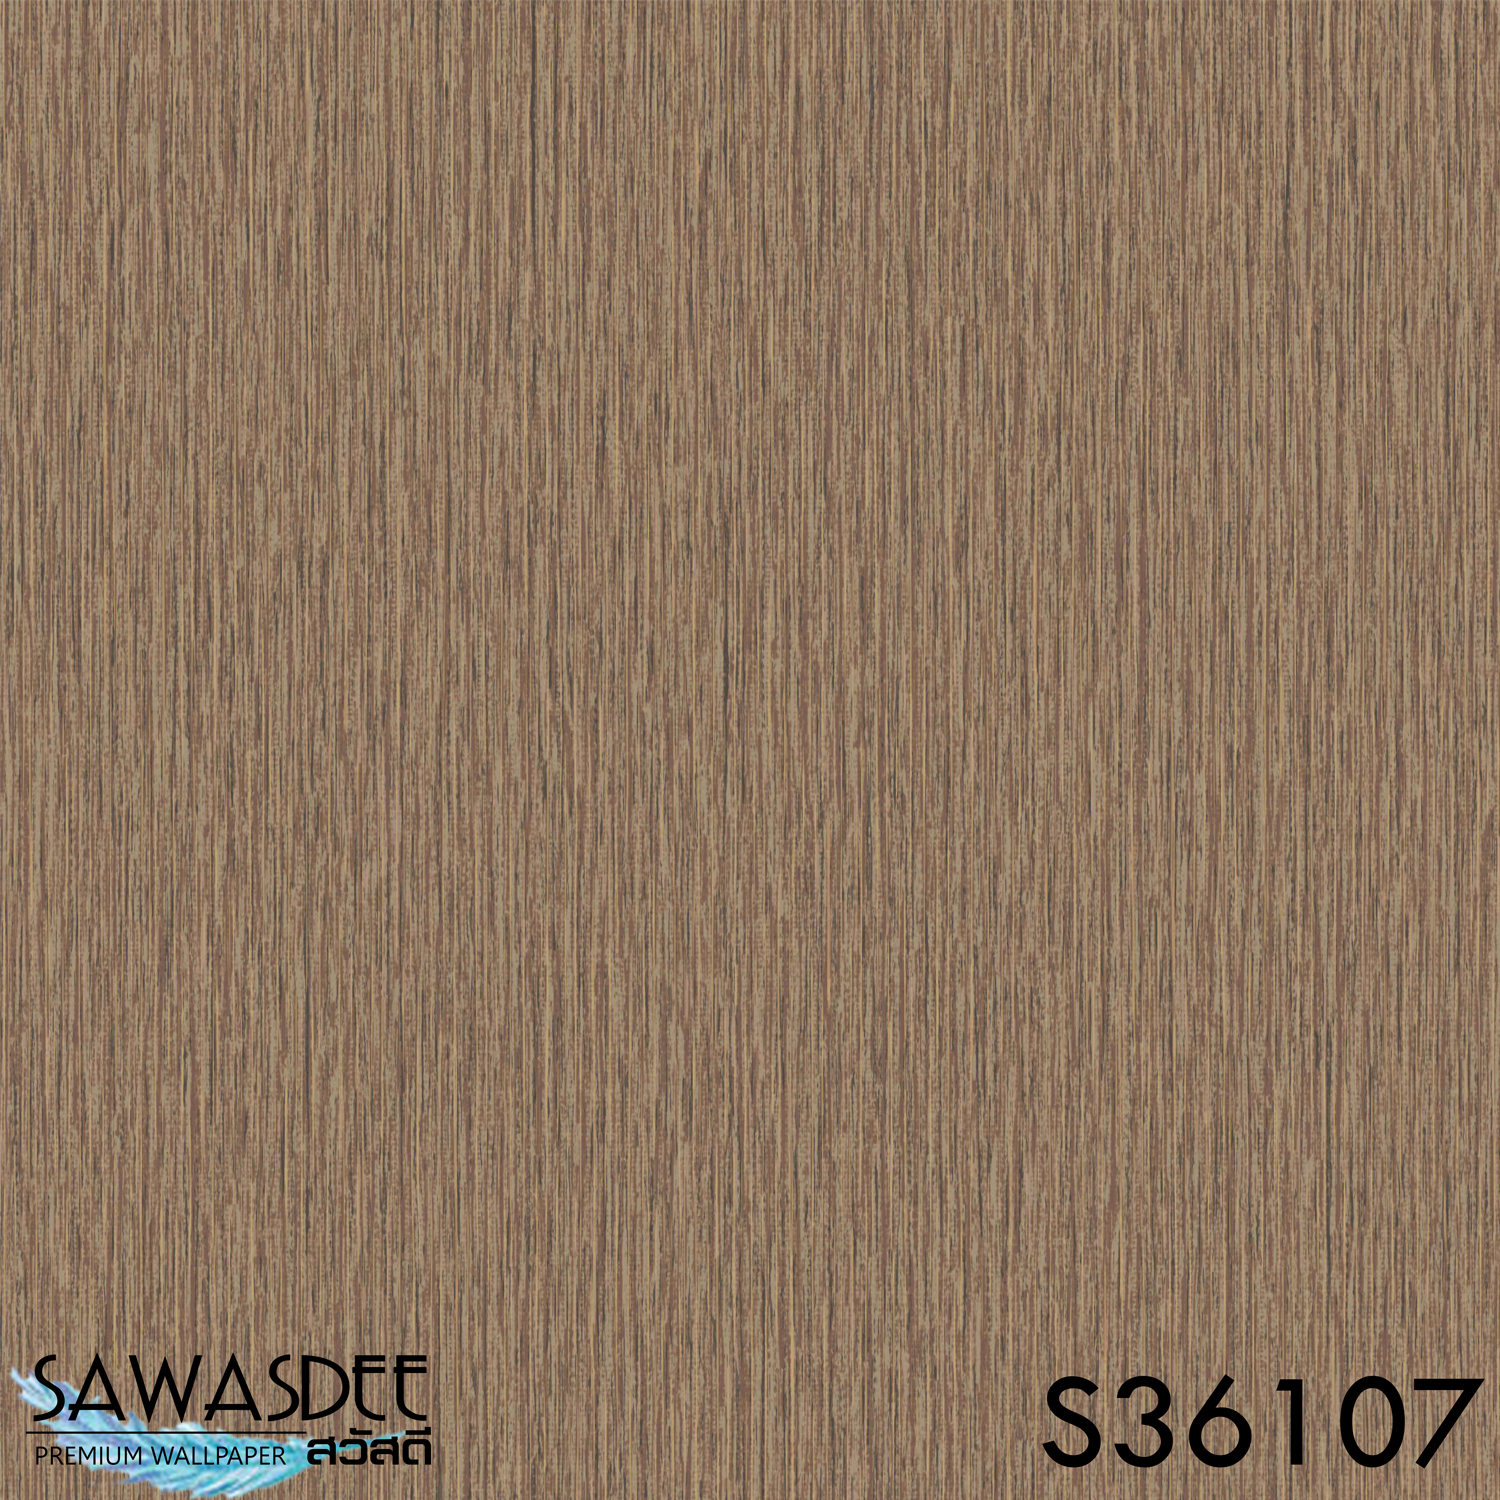 Wallpaper (SAWASDEE) S36107